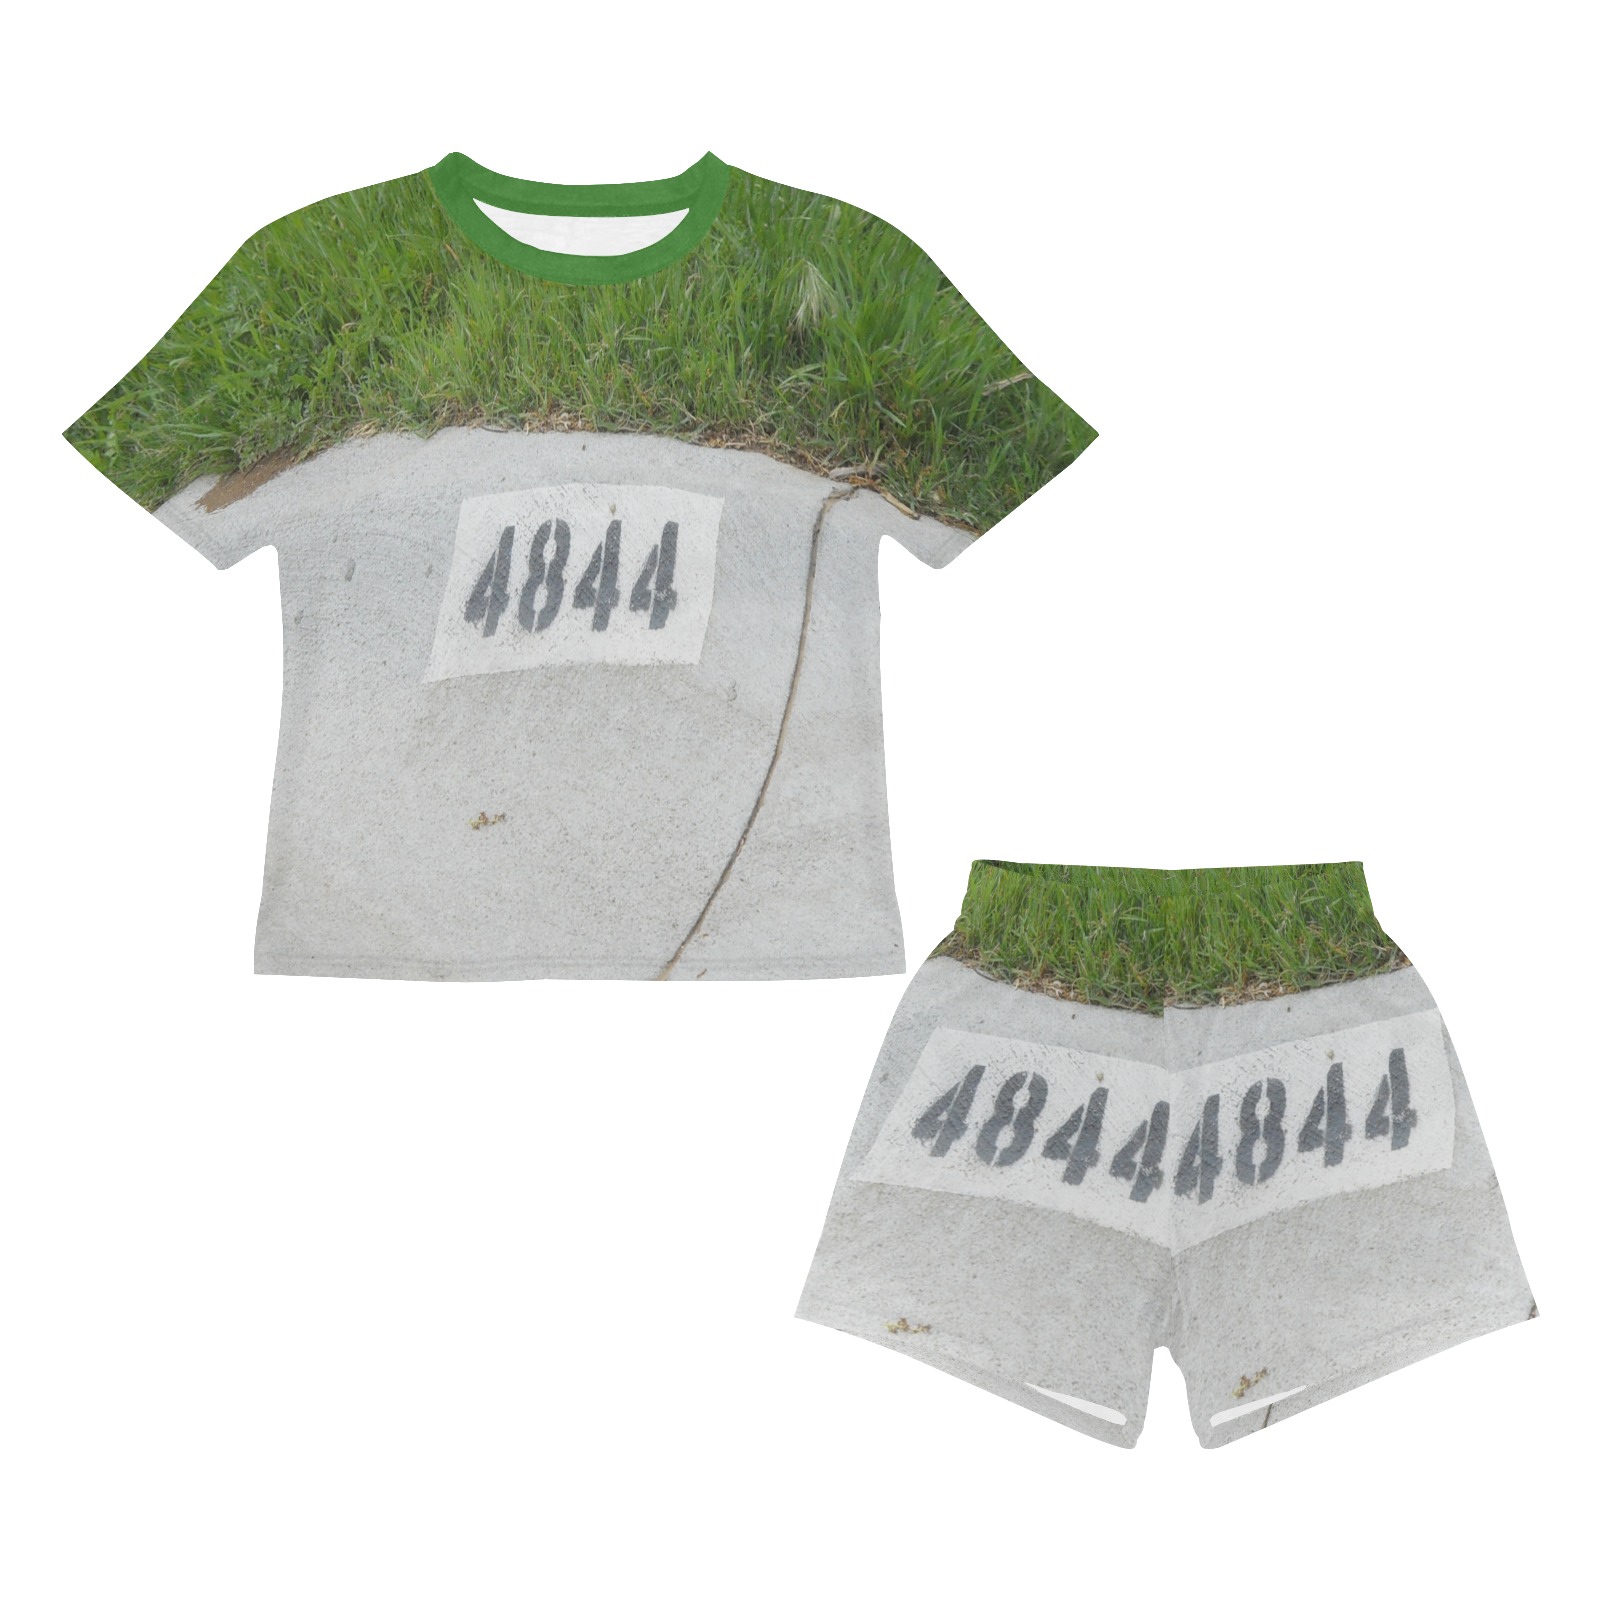 Street Number 4844 with Bright Green Collar Big Girls' Short Pajama Set